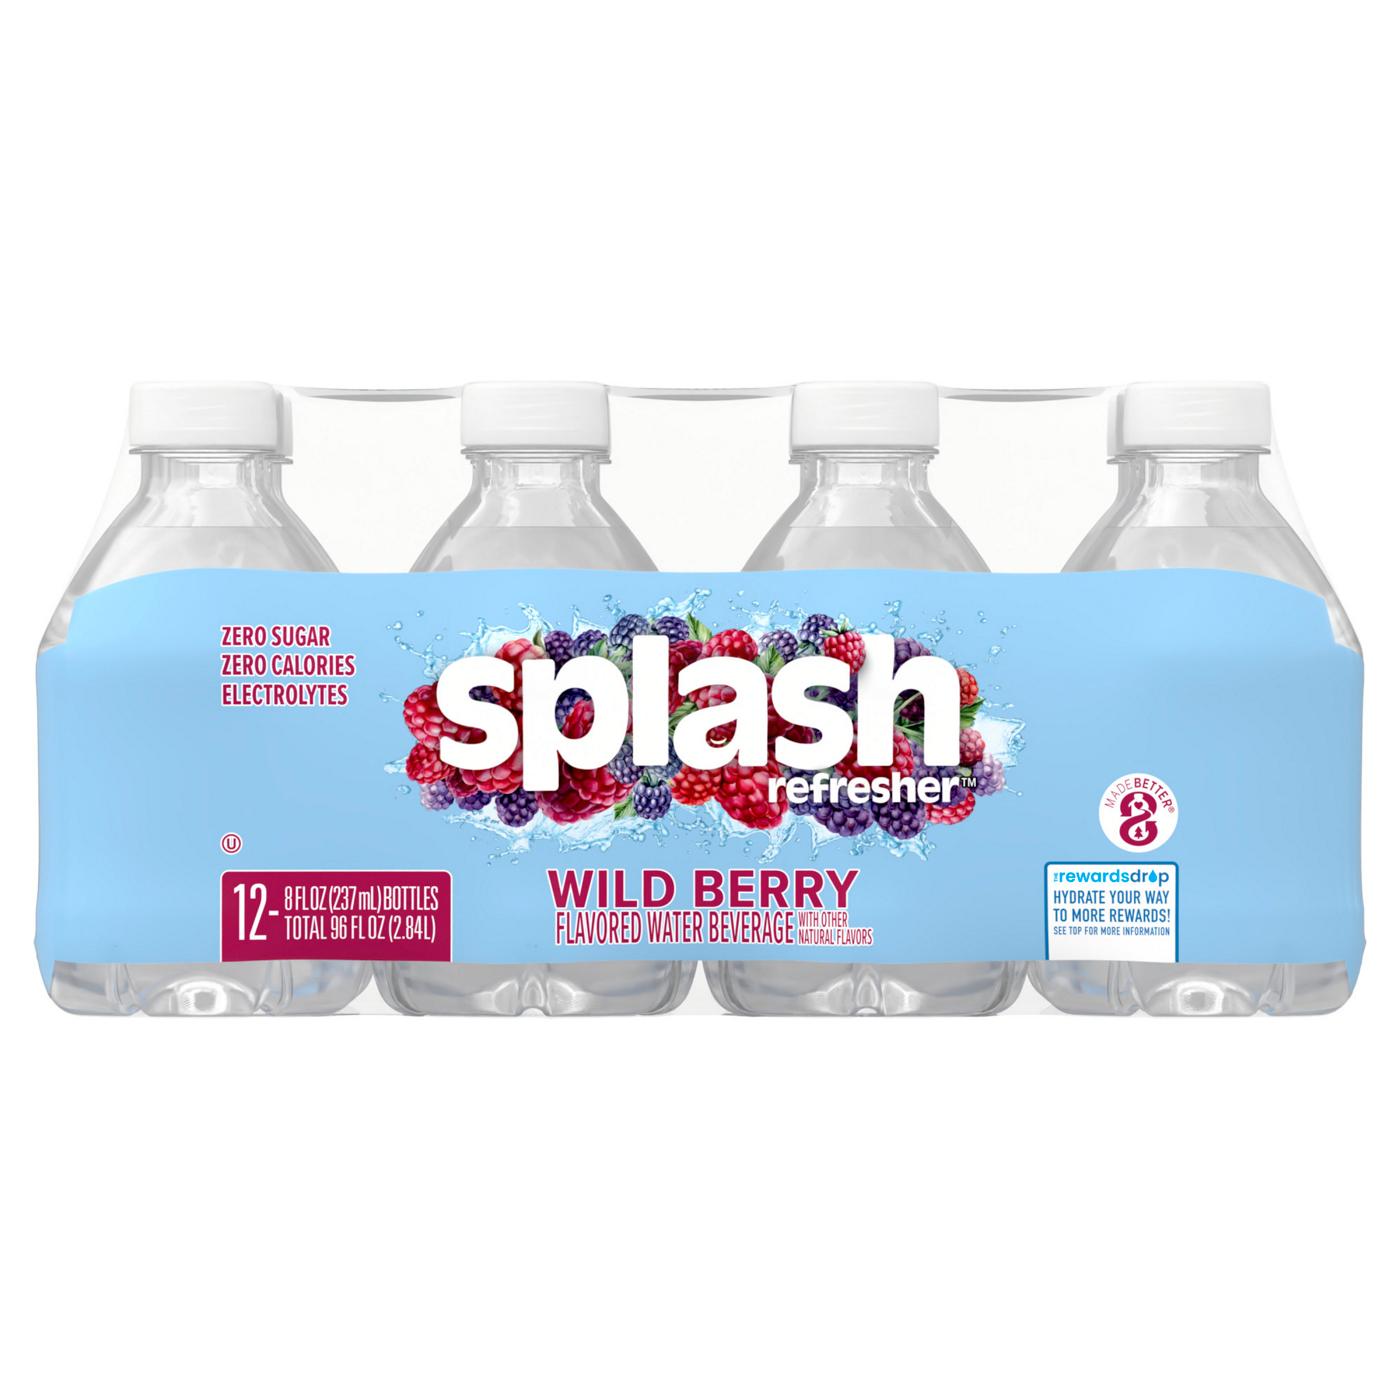 SPLASH Wild Berry Flavor Water Beverage 8 oz Bottles; image 4 of 7